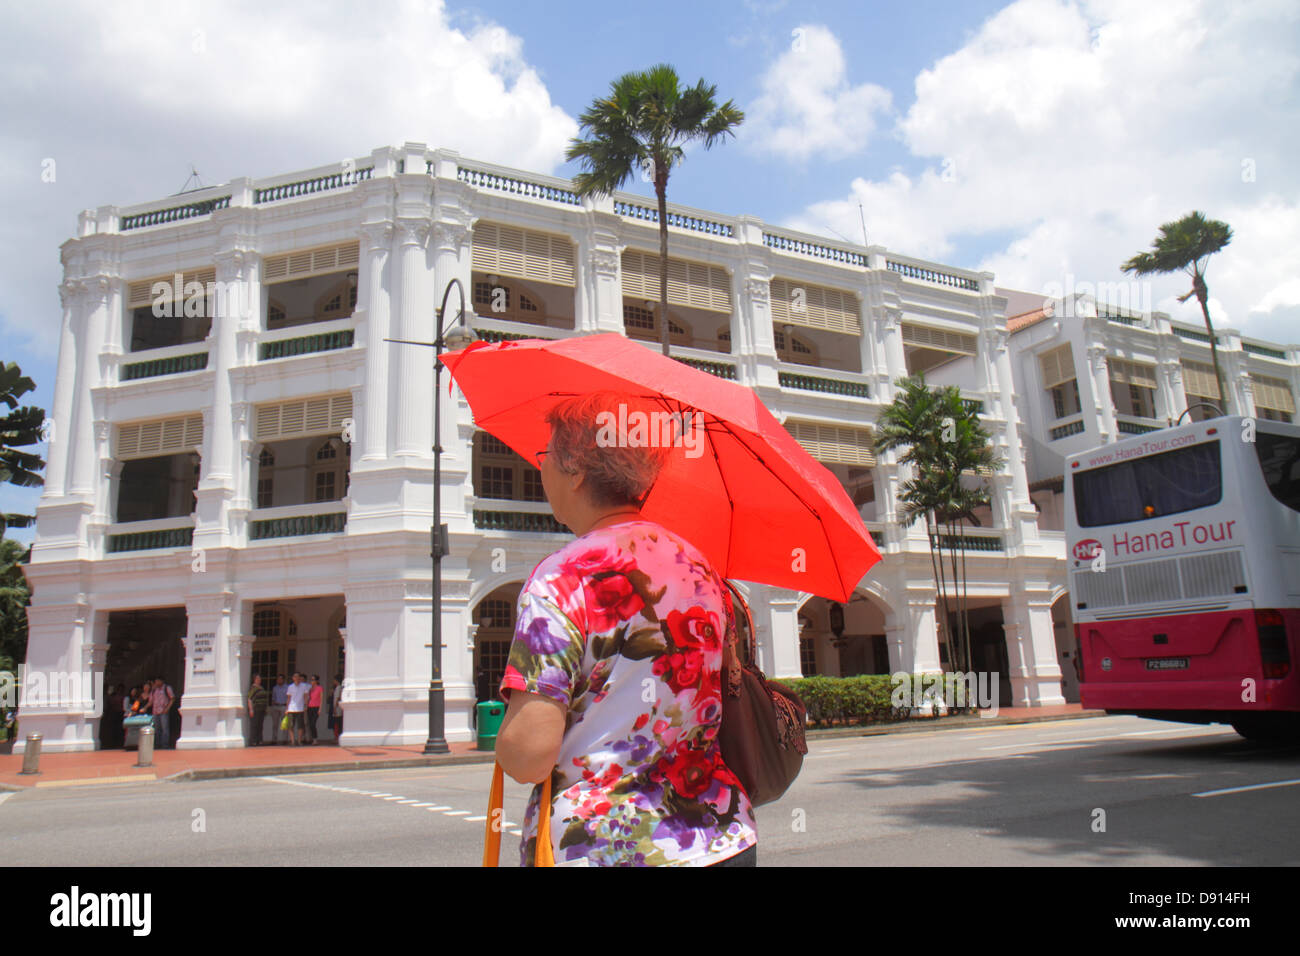 Singapore,Bras Basah Road,Raffles Boulevard,Asian Asians ethnic immigrant immigrants minority,adult adults woman women female lady,red,umbrella,shade, Stock Photo